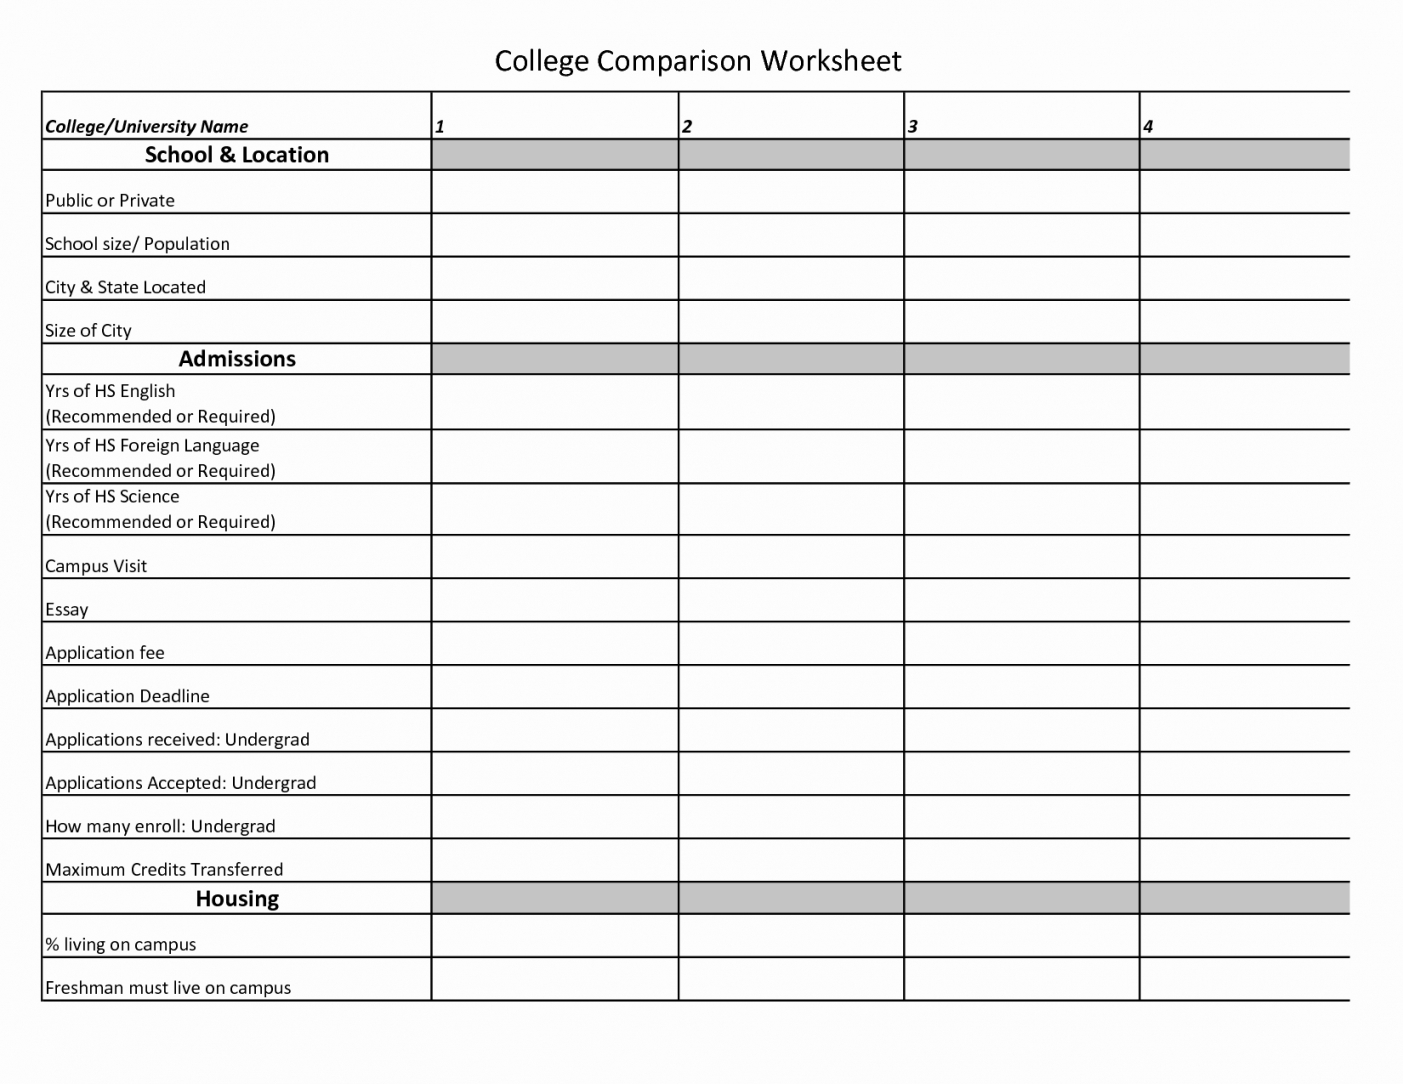 University Comparison Spreadsheet Intended For College Comparison Spreadsheet New Release